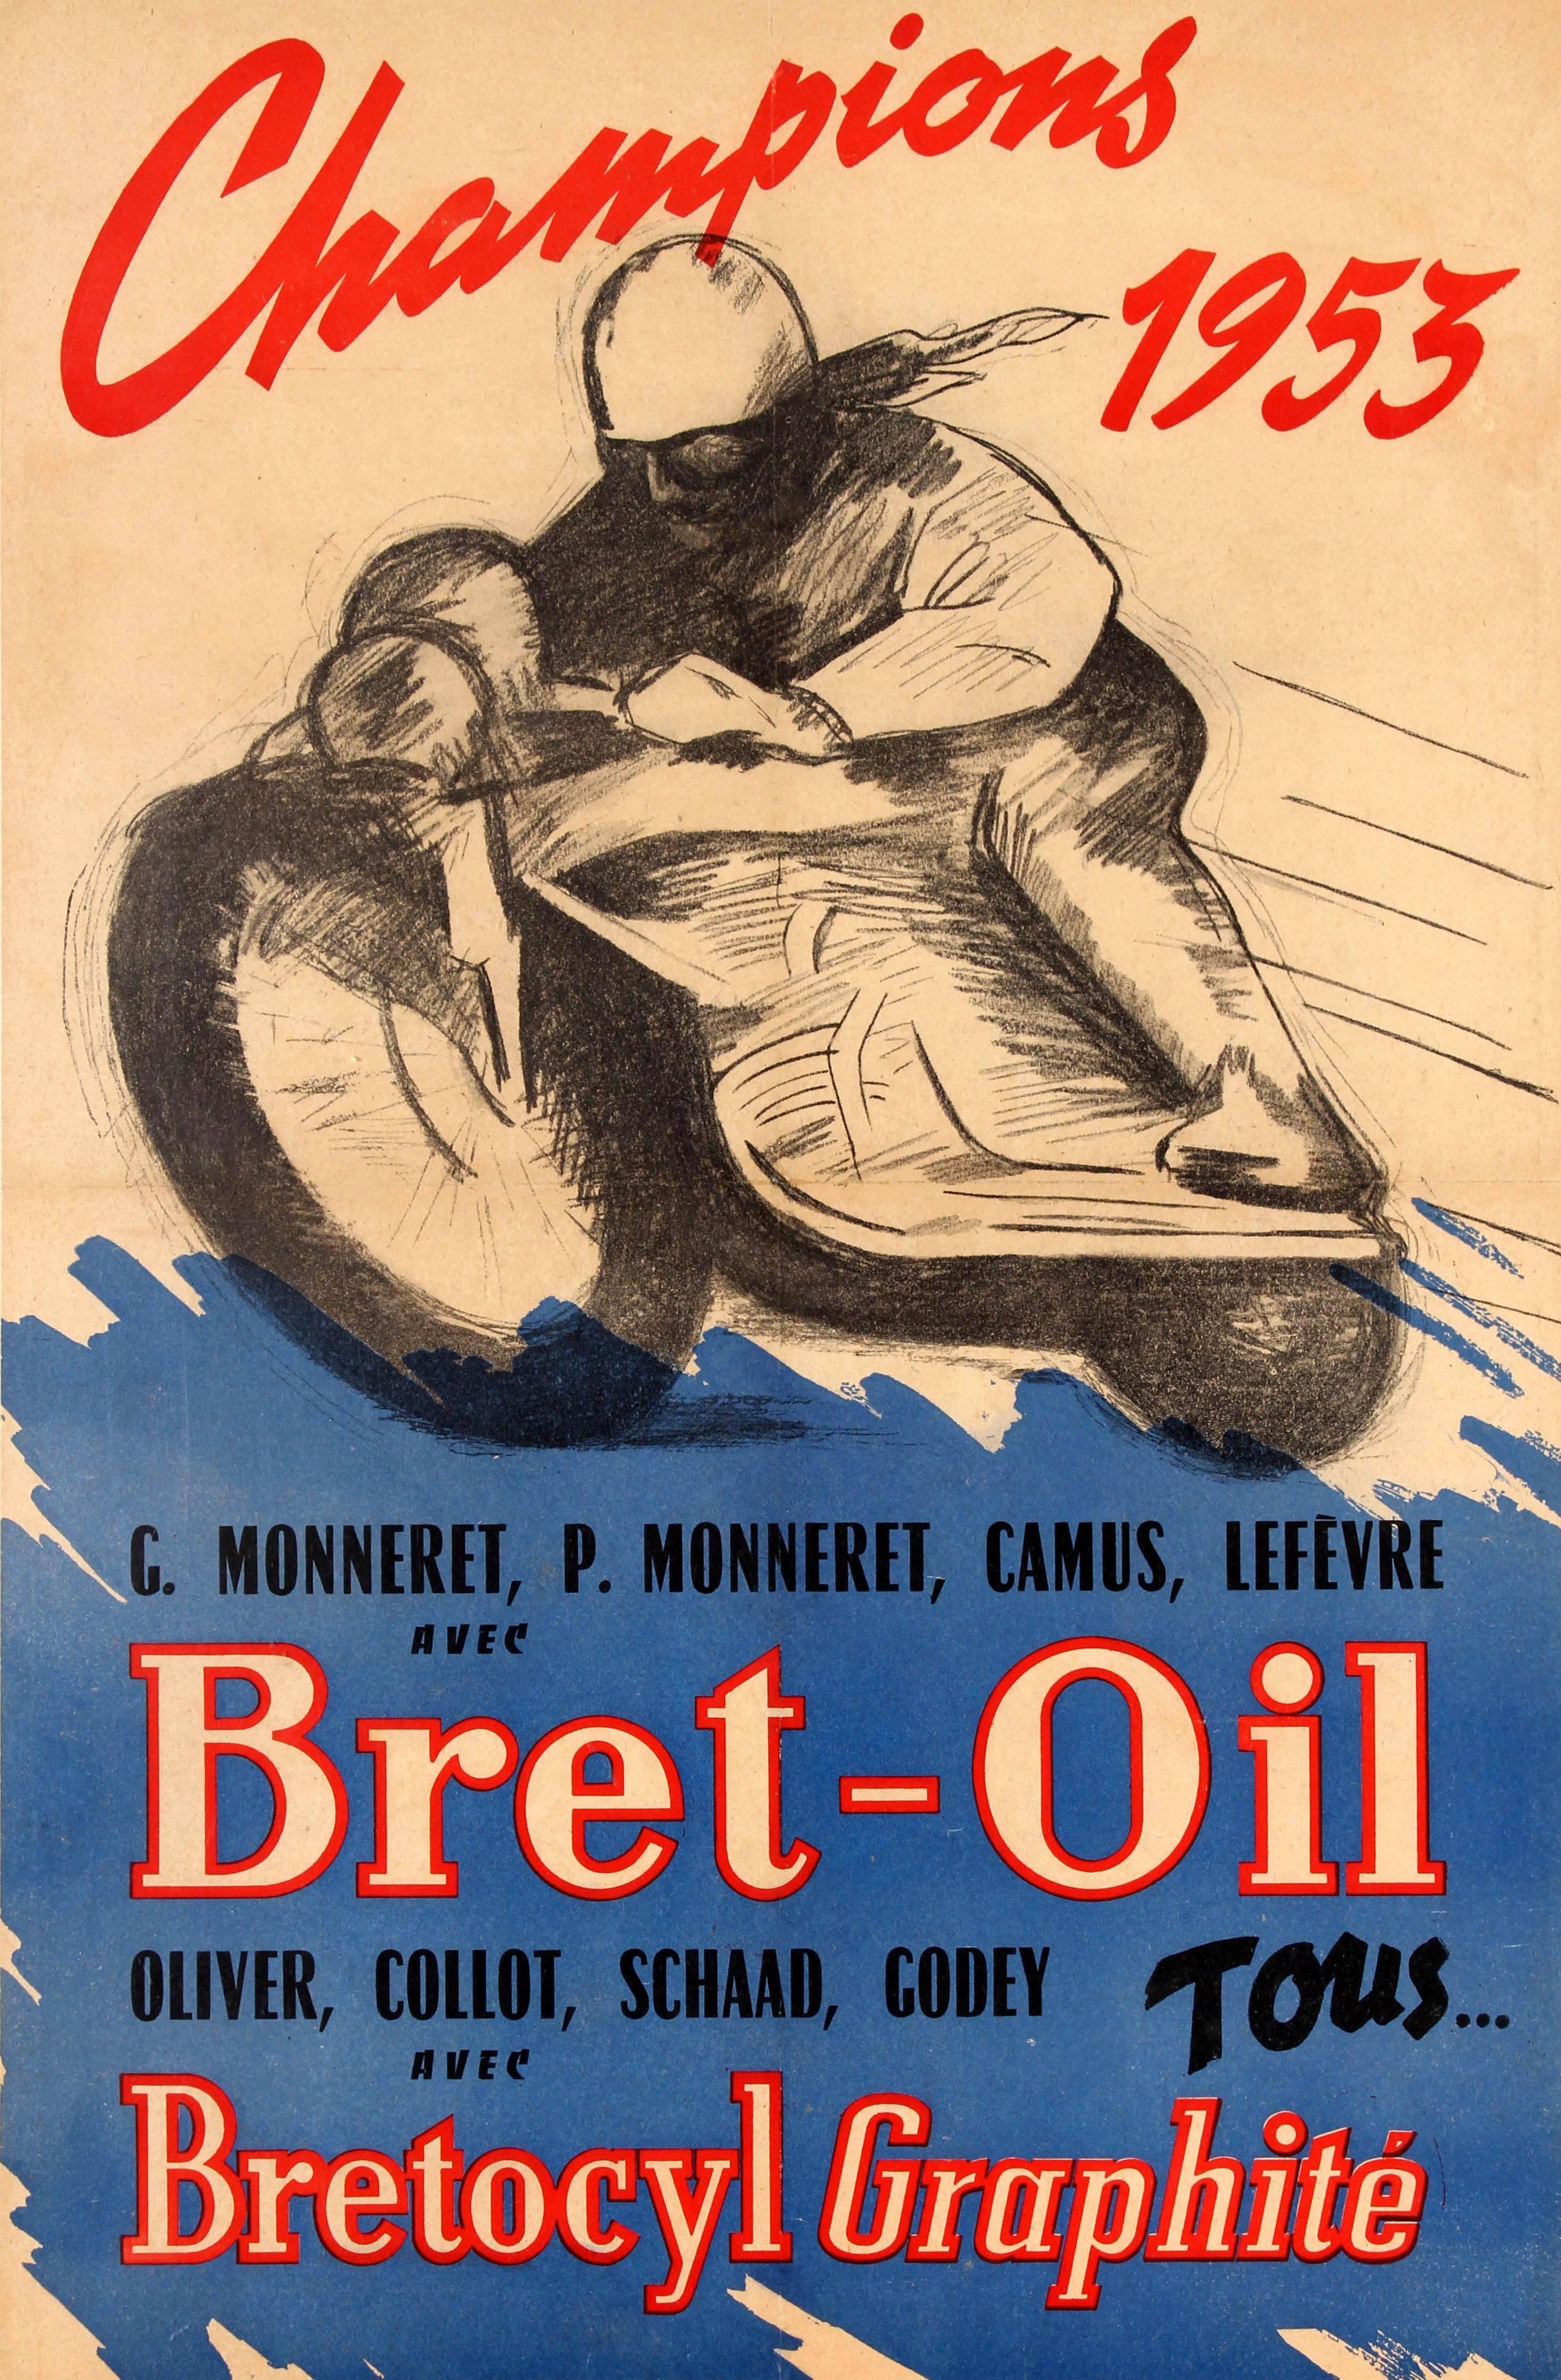 Unknown Print - Original Vintage Bret Oil Motor Racing Sport Poster - Motorcycle Champions 1953